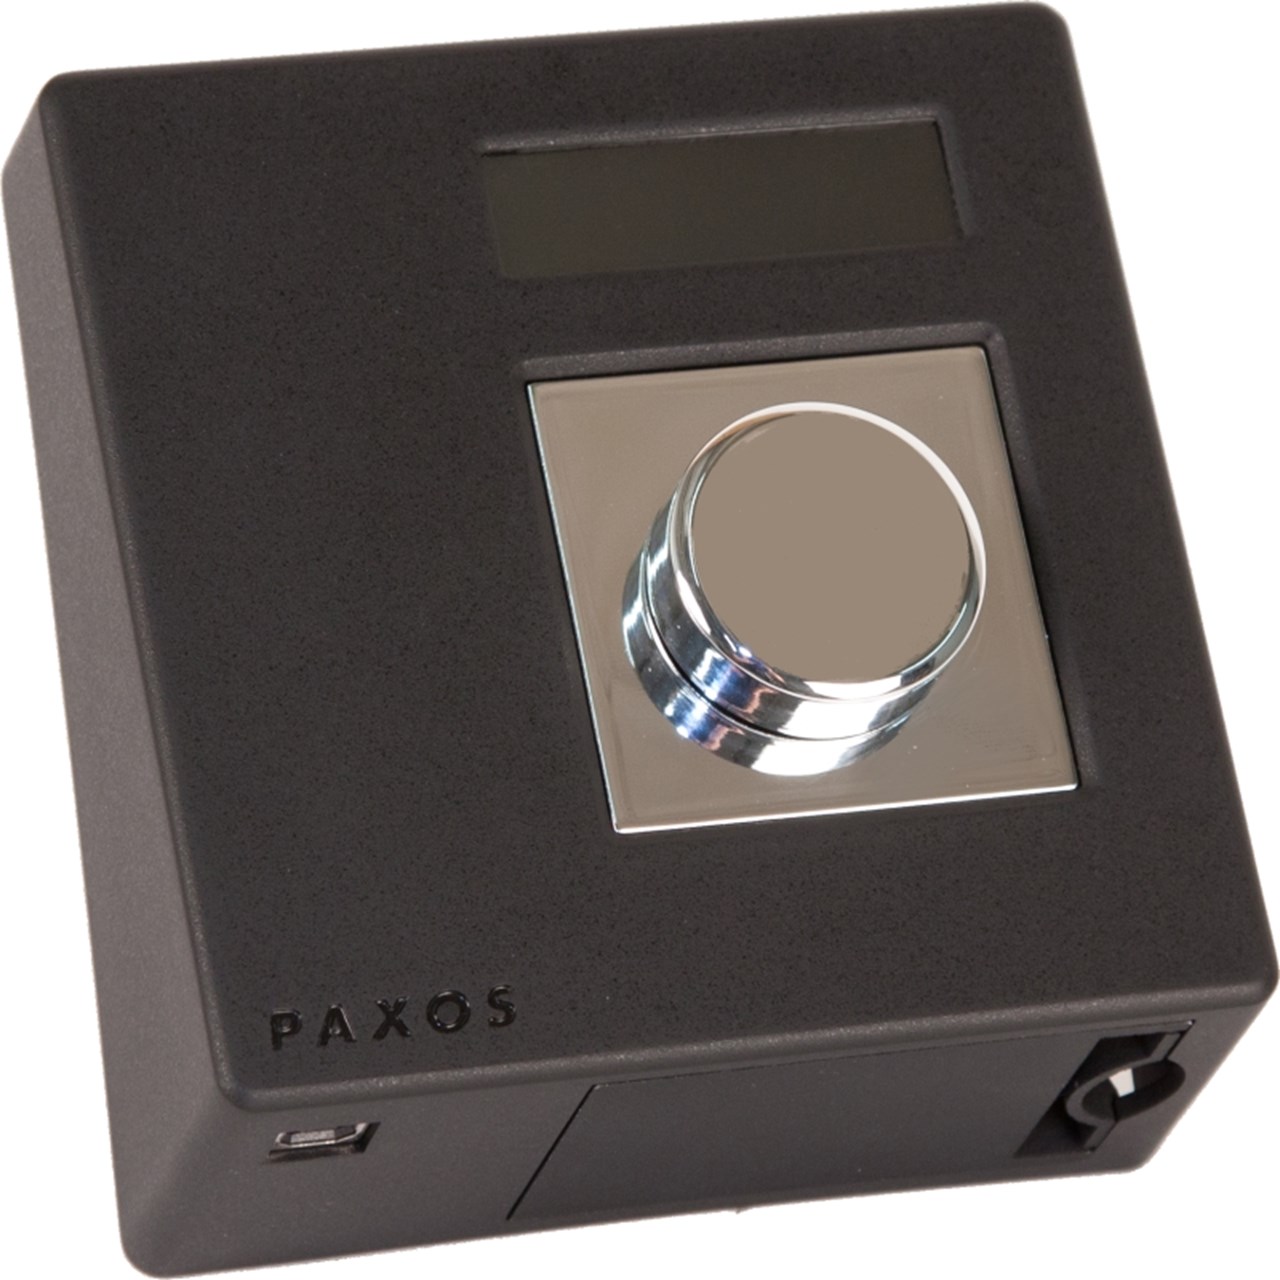 Paxos Advance IP high-security electronic redundant system